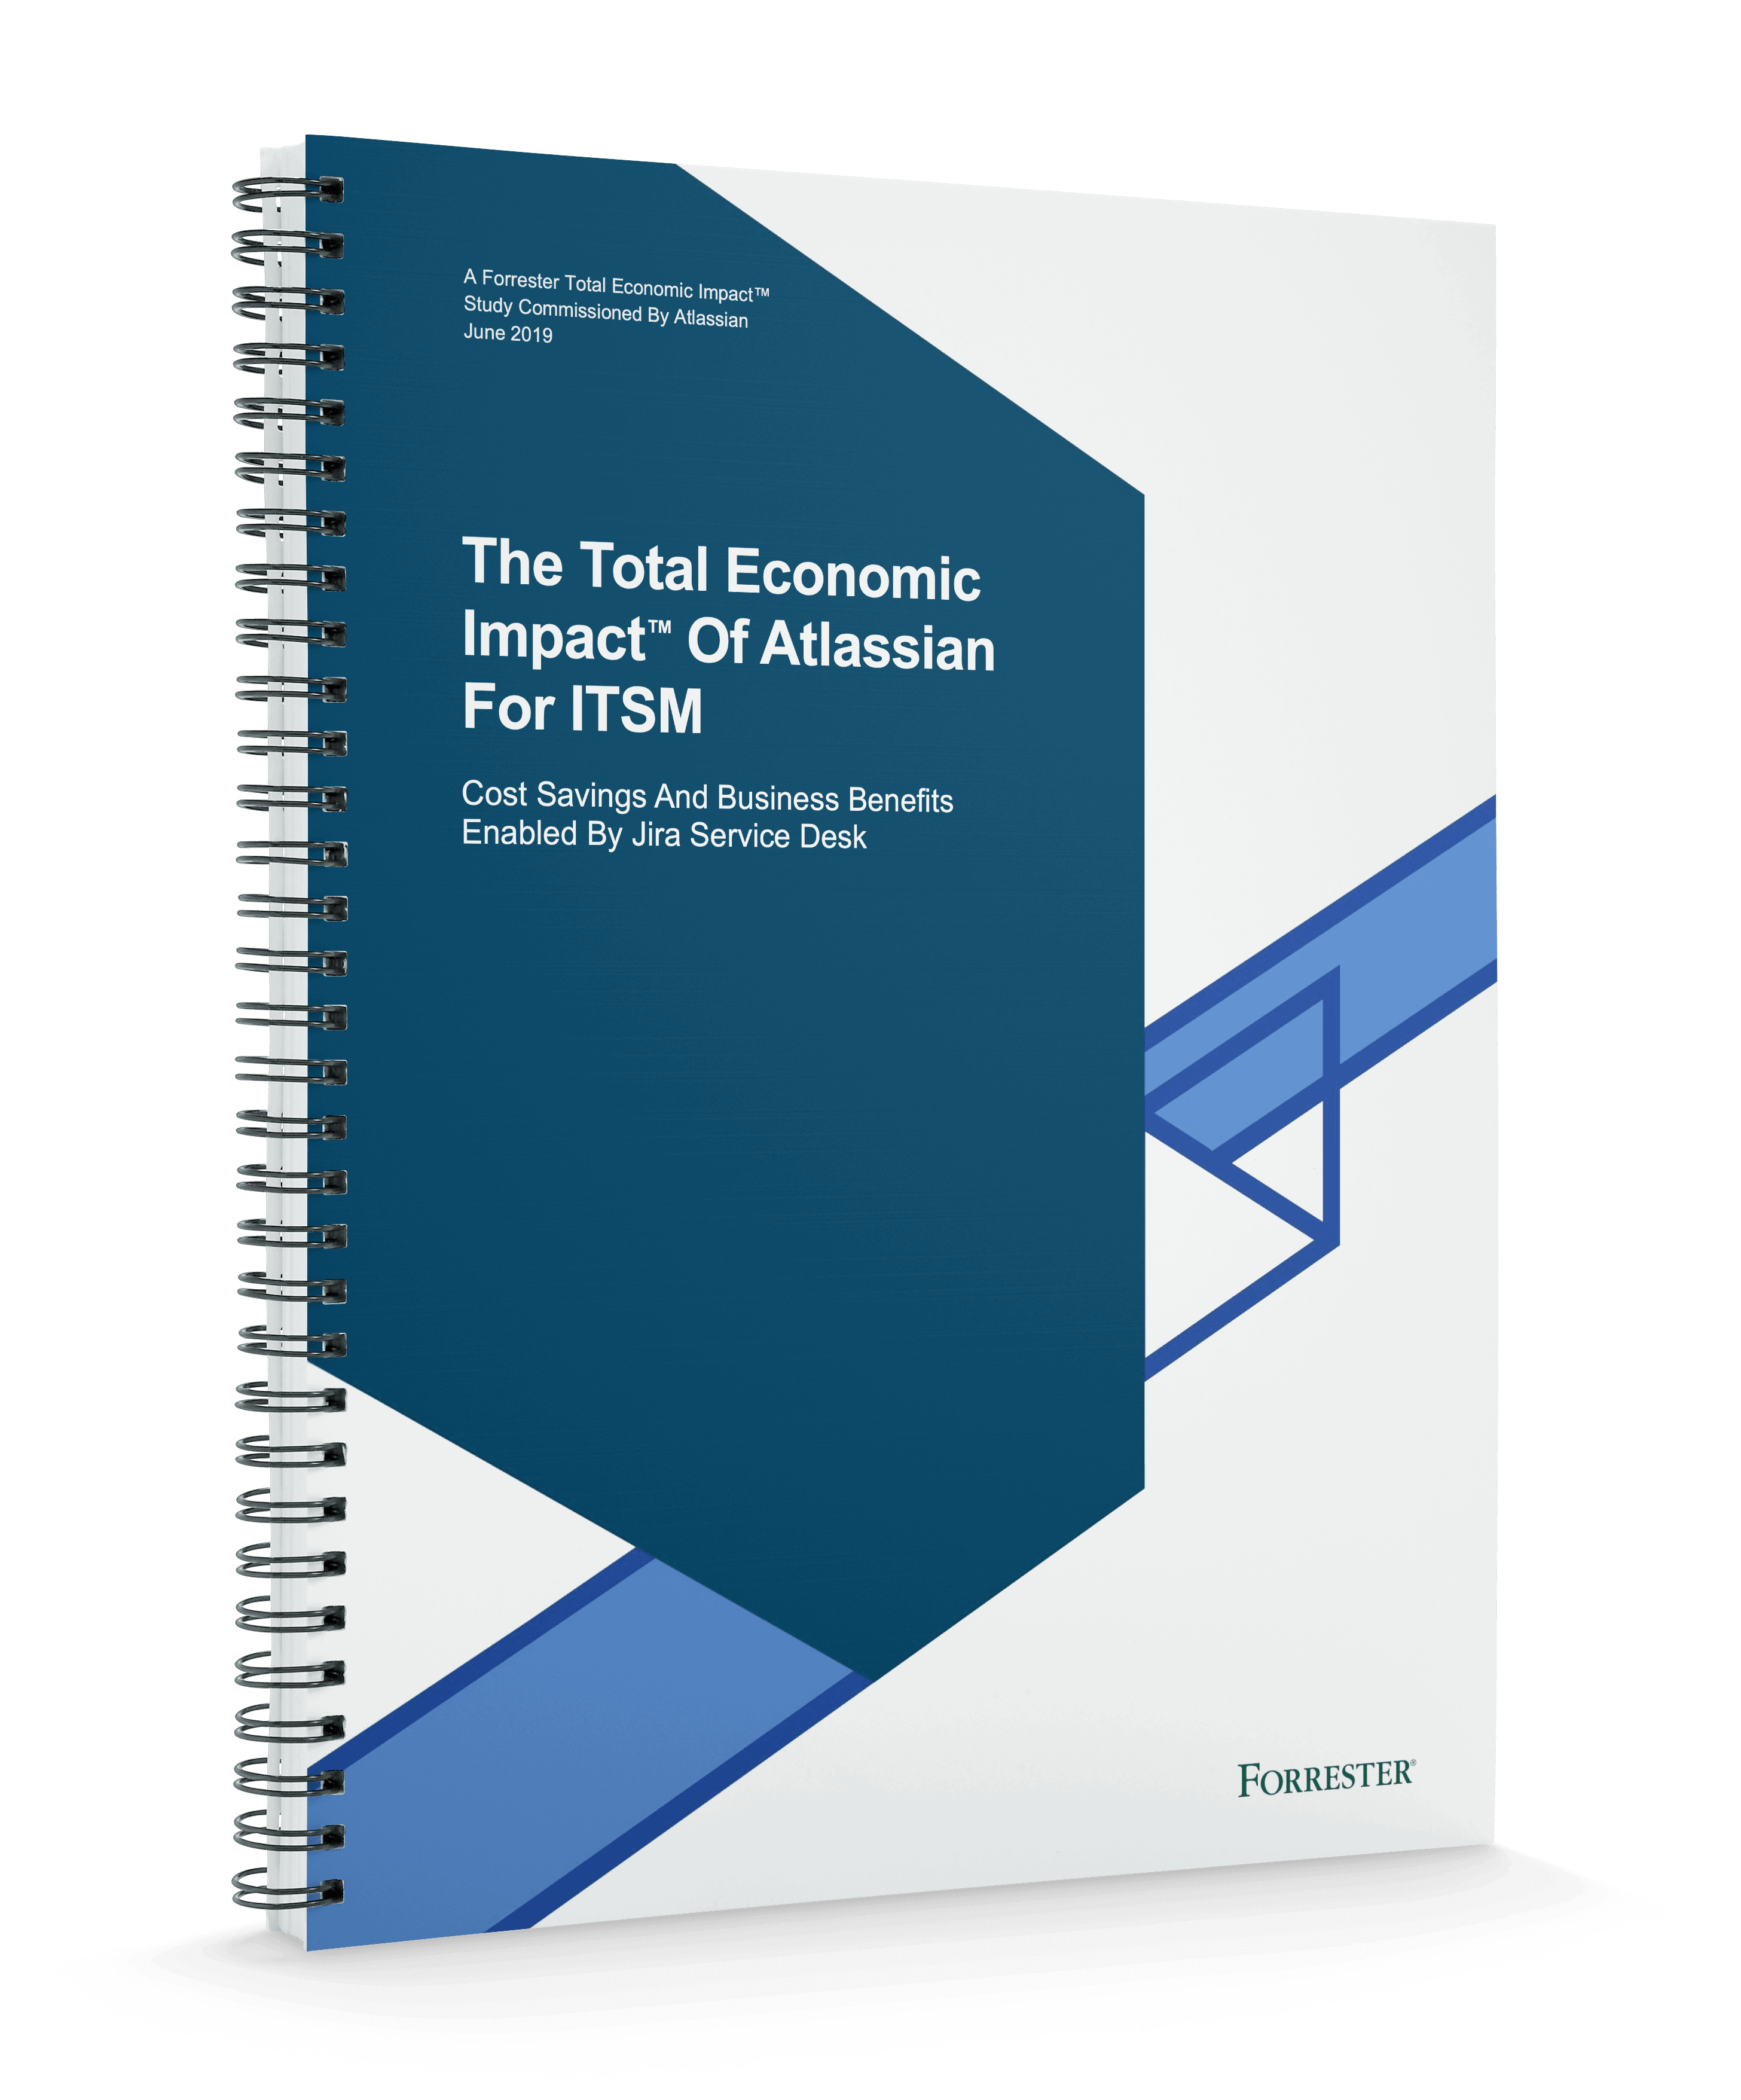 Forresters Total Economic Impact™ von Atlassian für ITSM